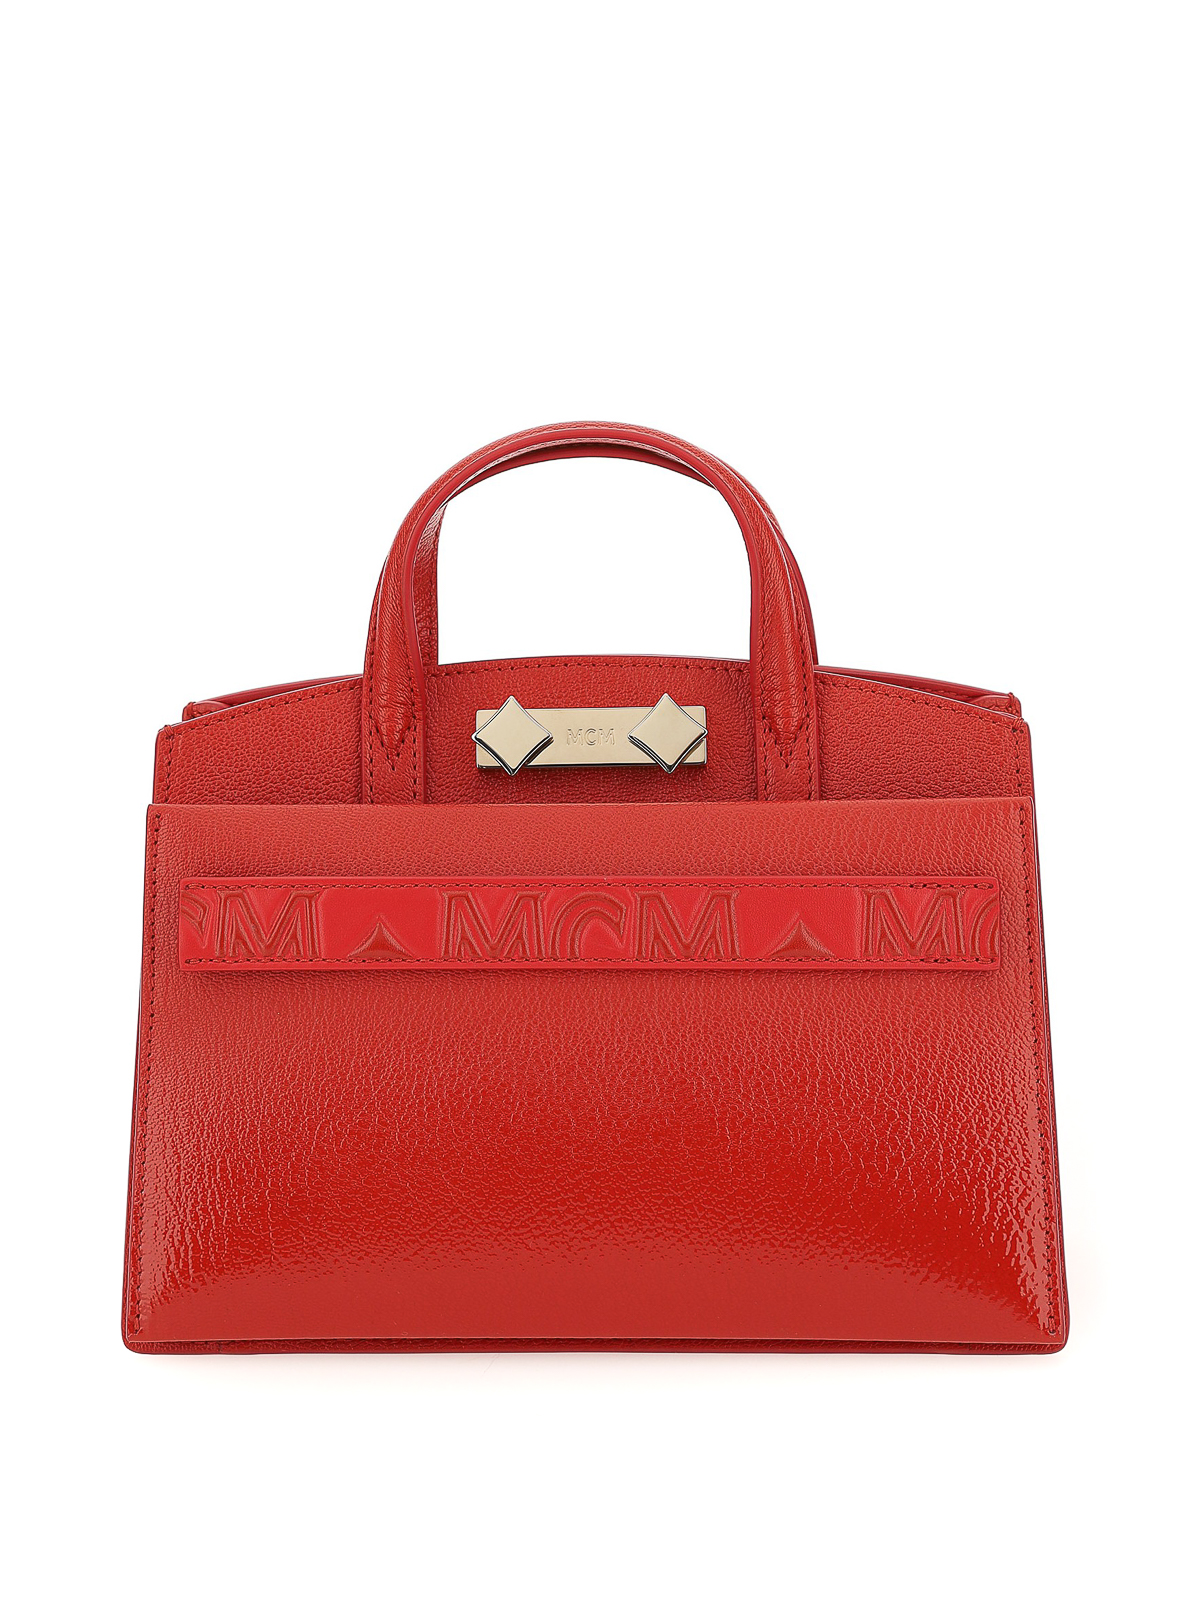 Totes bags Mcm - Milano leather mini tote - MWT9ADA18RU | iKRIX.com